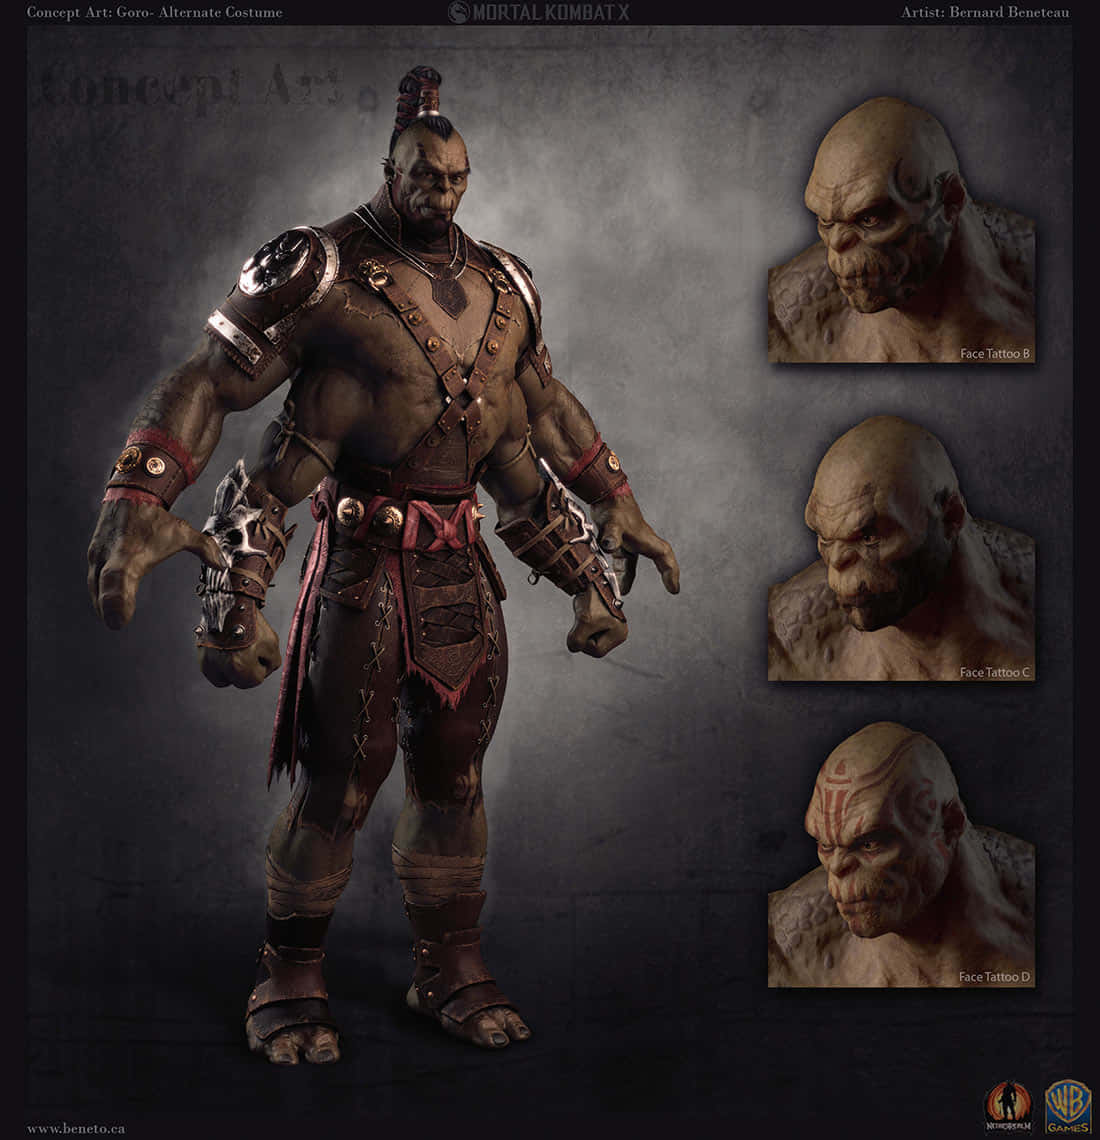 Goro: The Unstoppable Beast Of Mortal Kombat Wallpaper